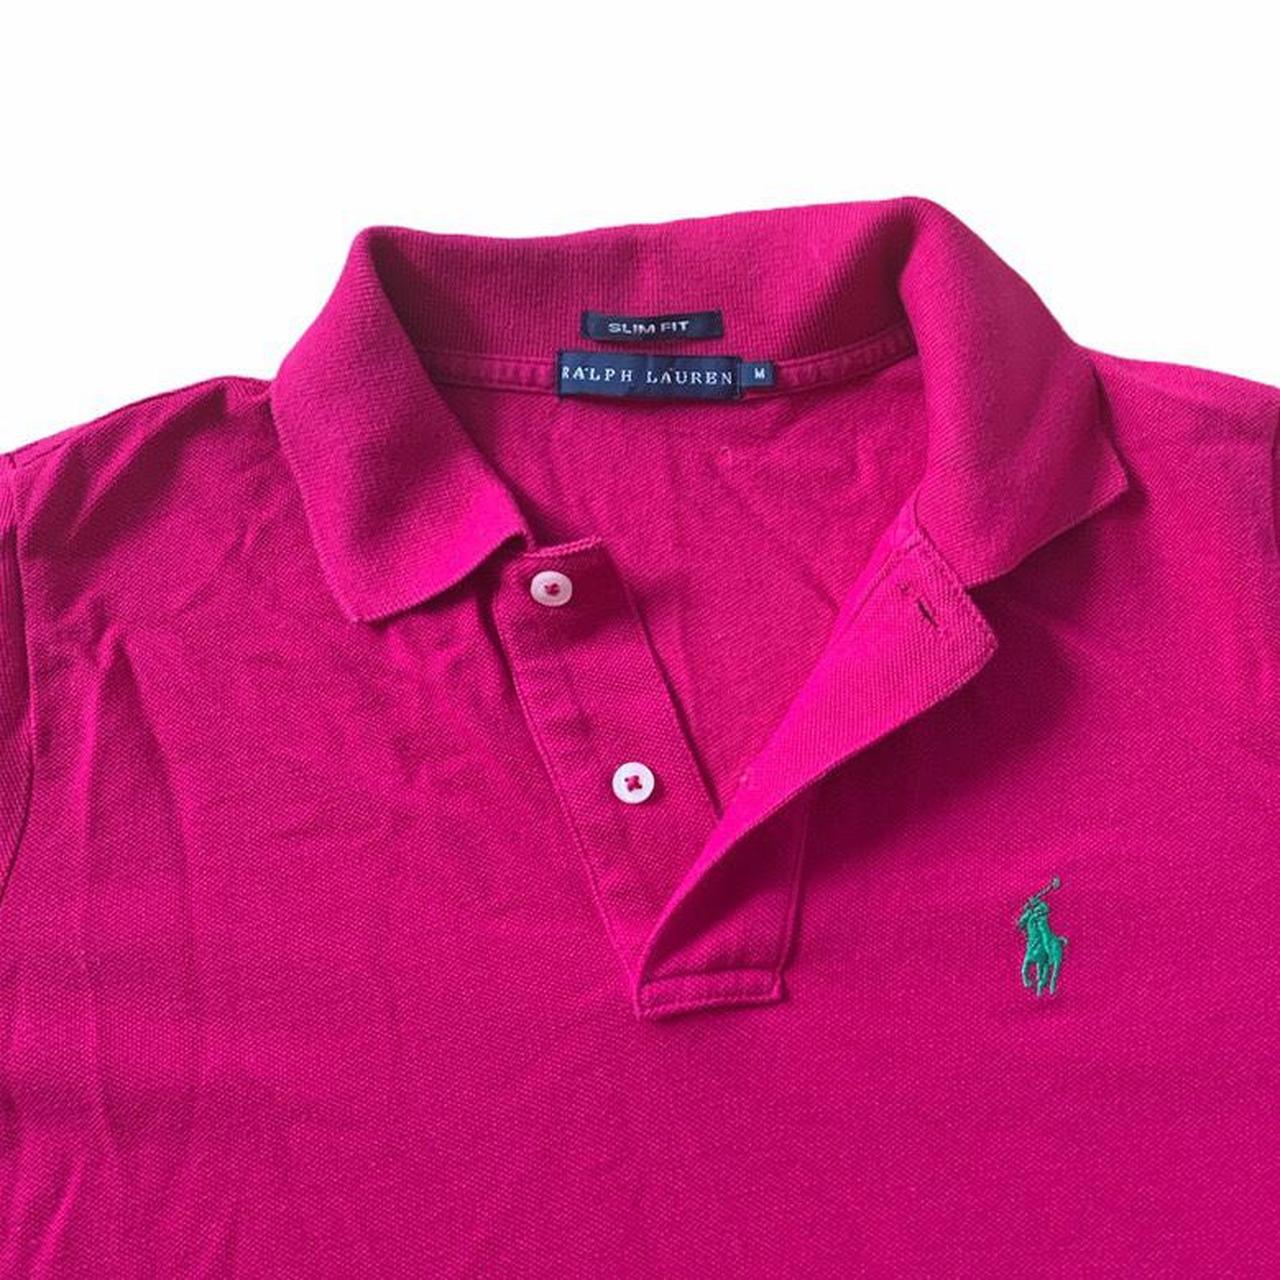 Dark pink ralph lauren slim fit polo shirt. looks... - Depop